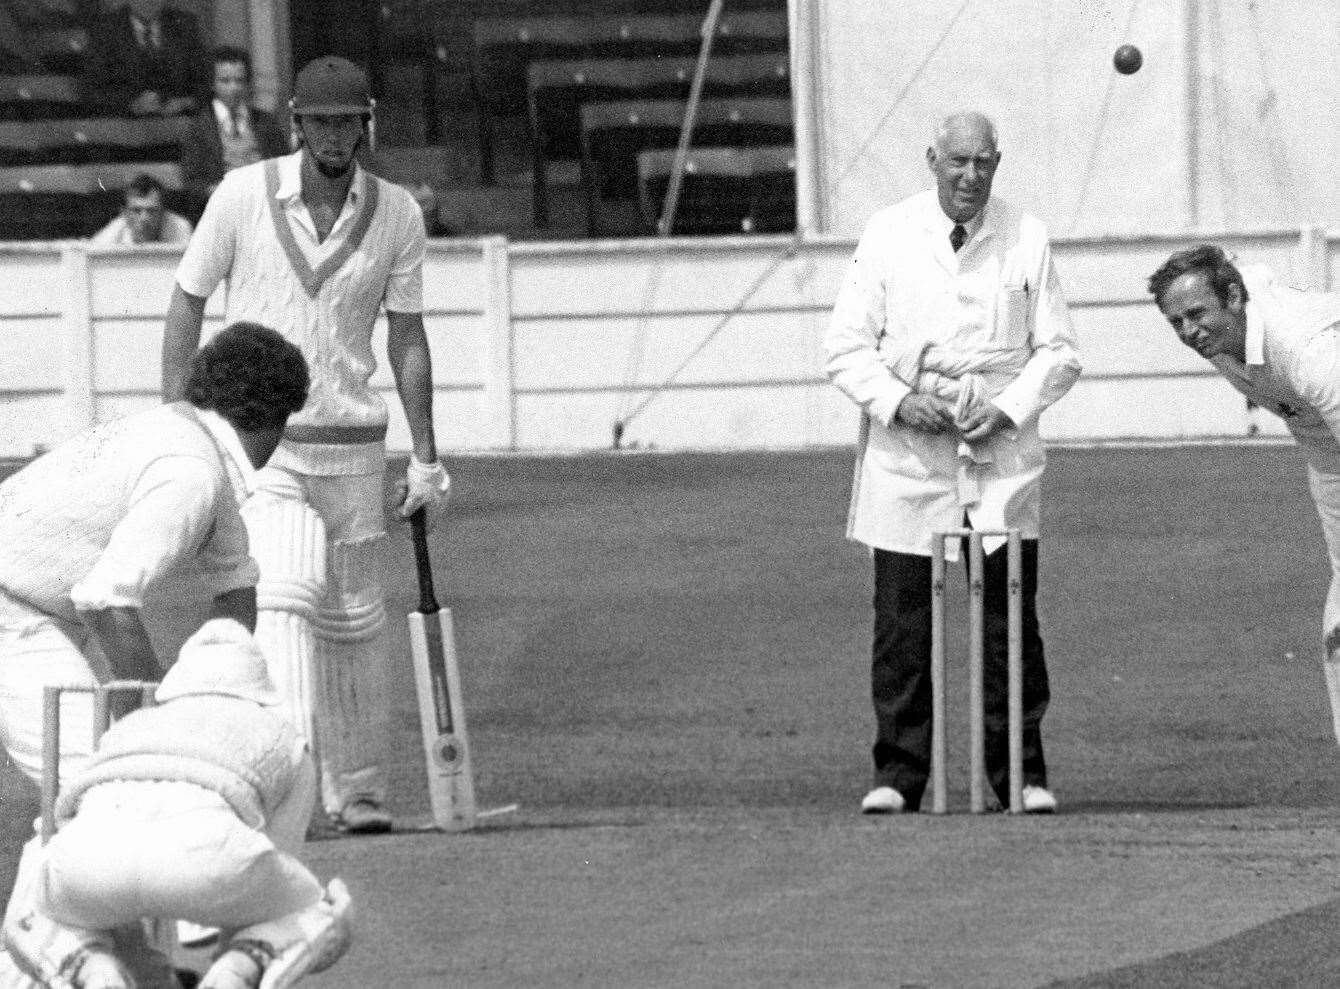 Former Kent and England cricketer Derek Underwood bowling in 1981